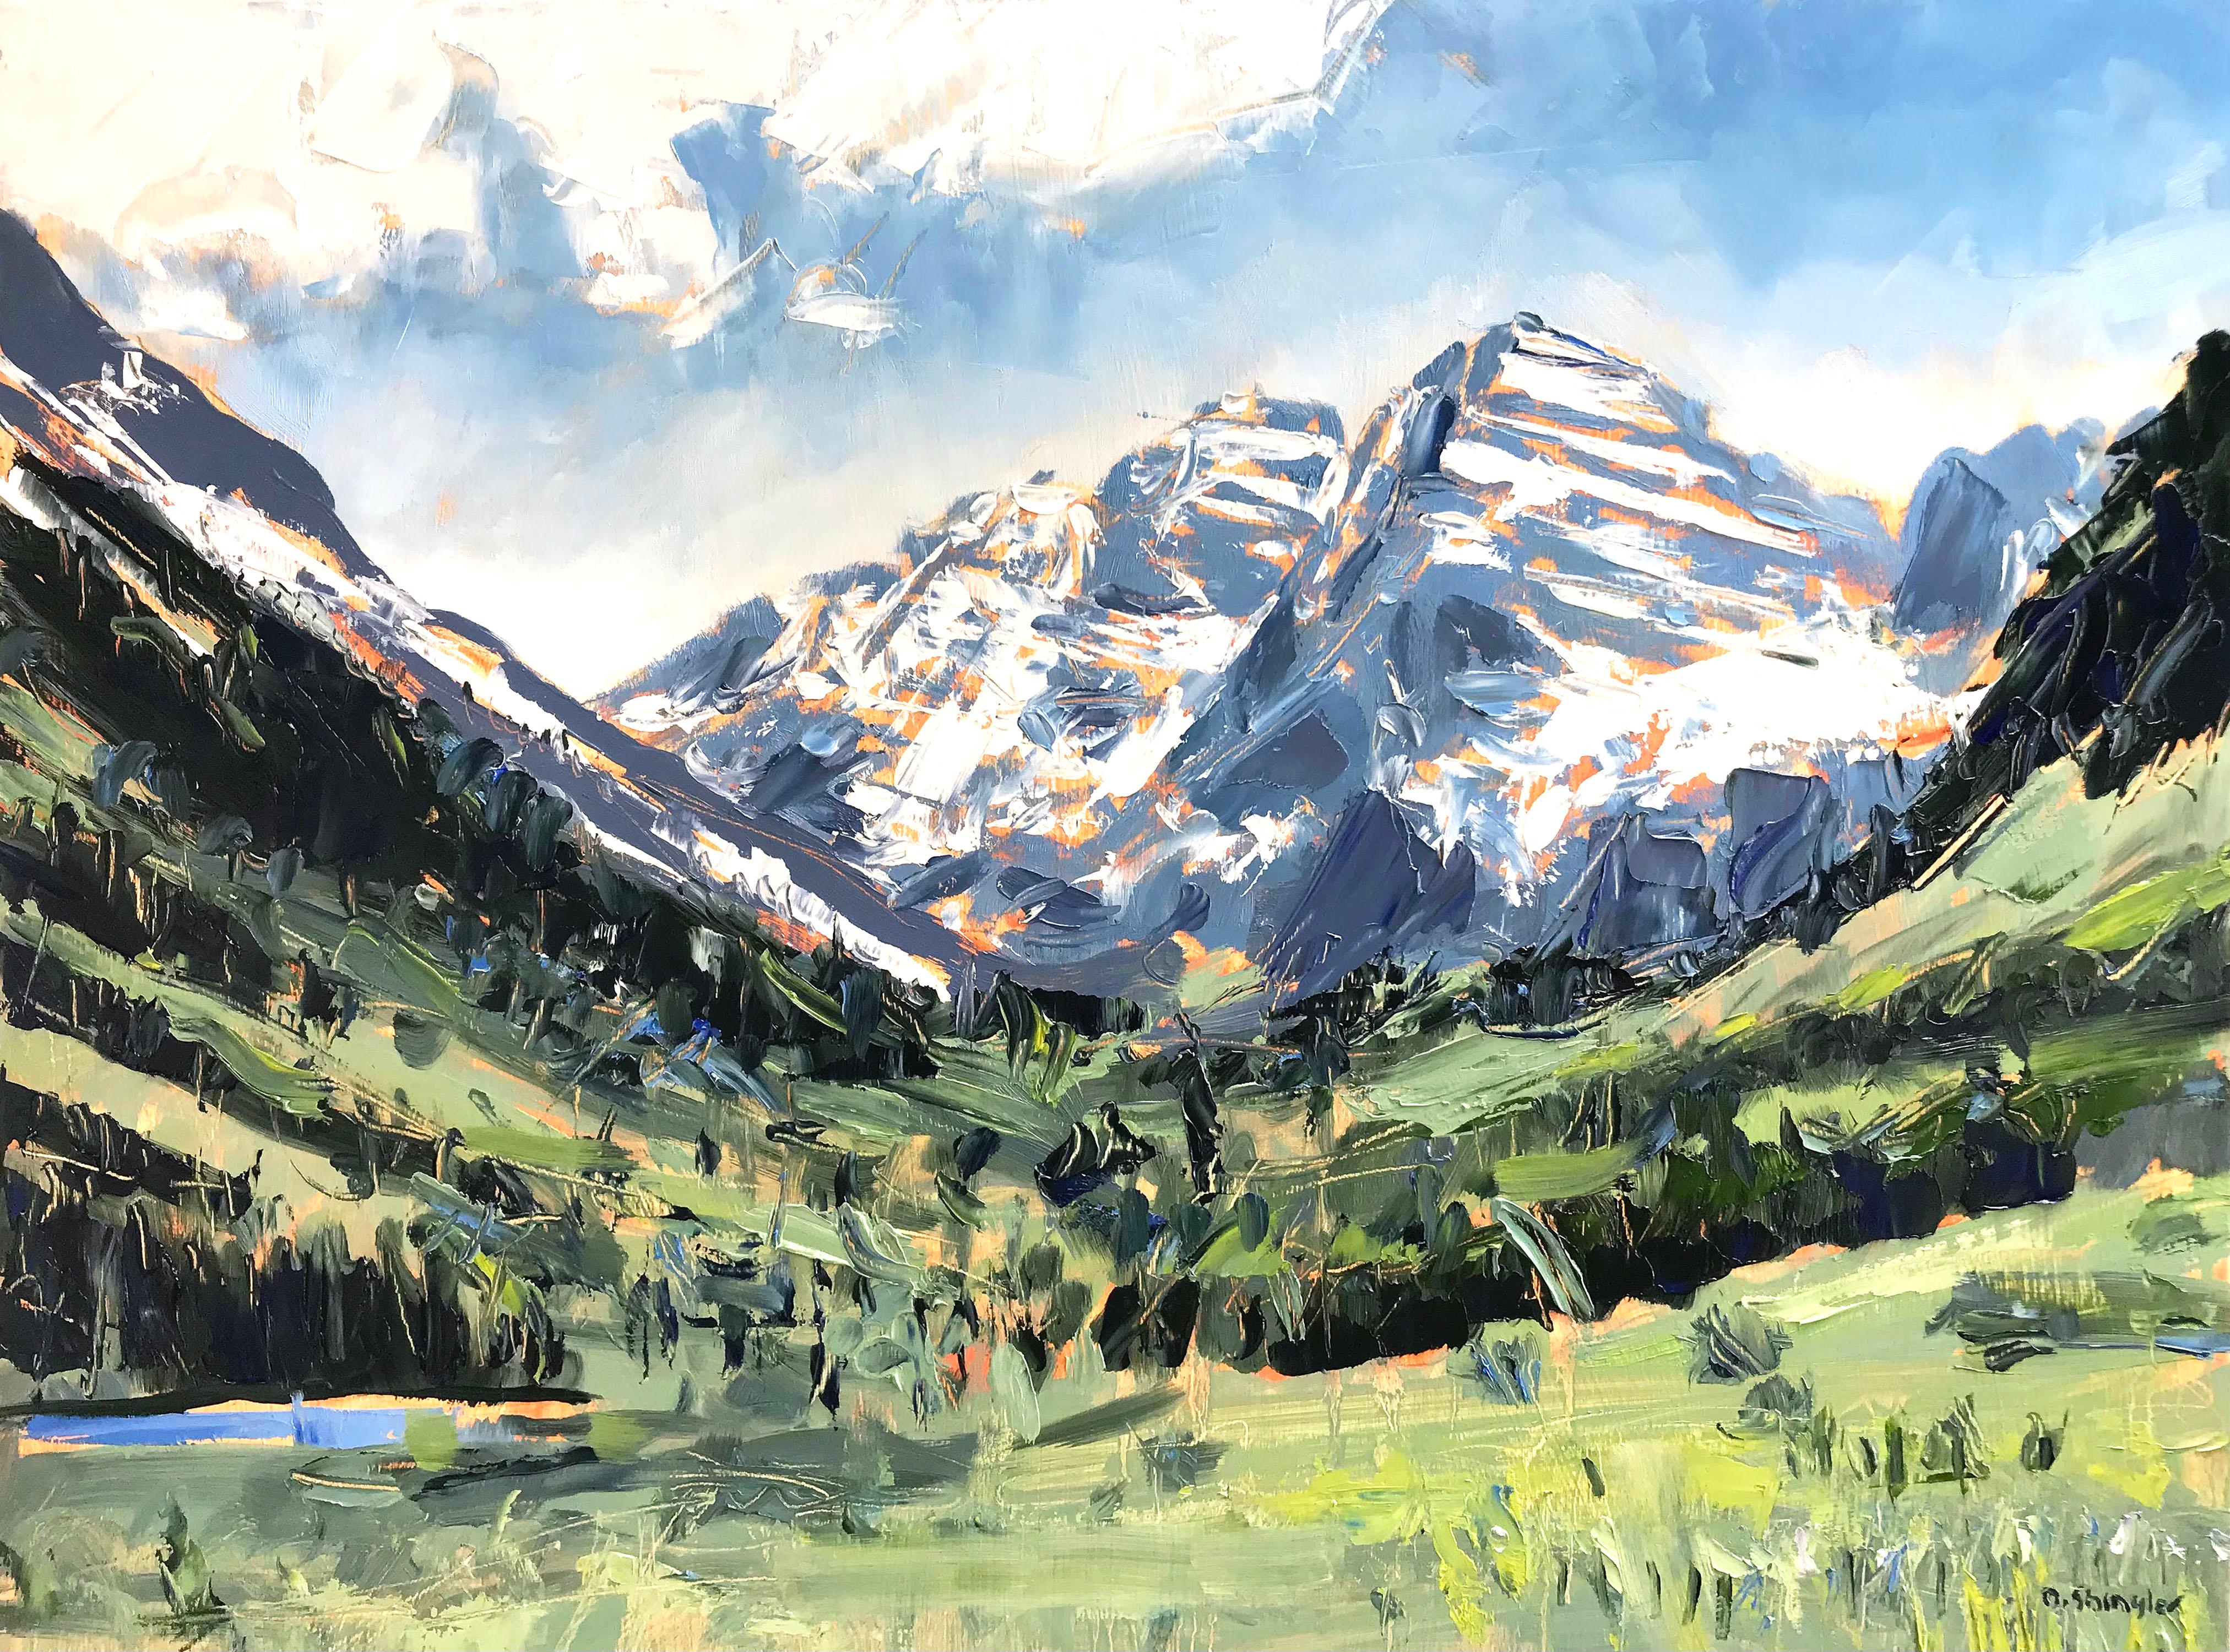 David Shingler Landscape Painting - "Maroon Bells, Colorado" Oil Painting